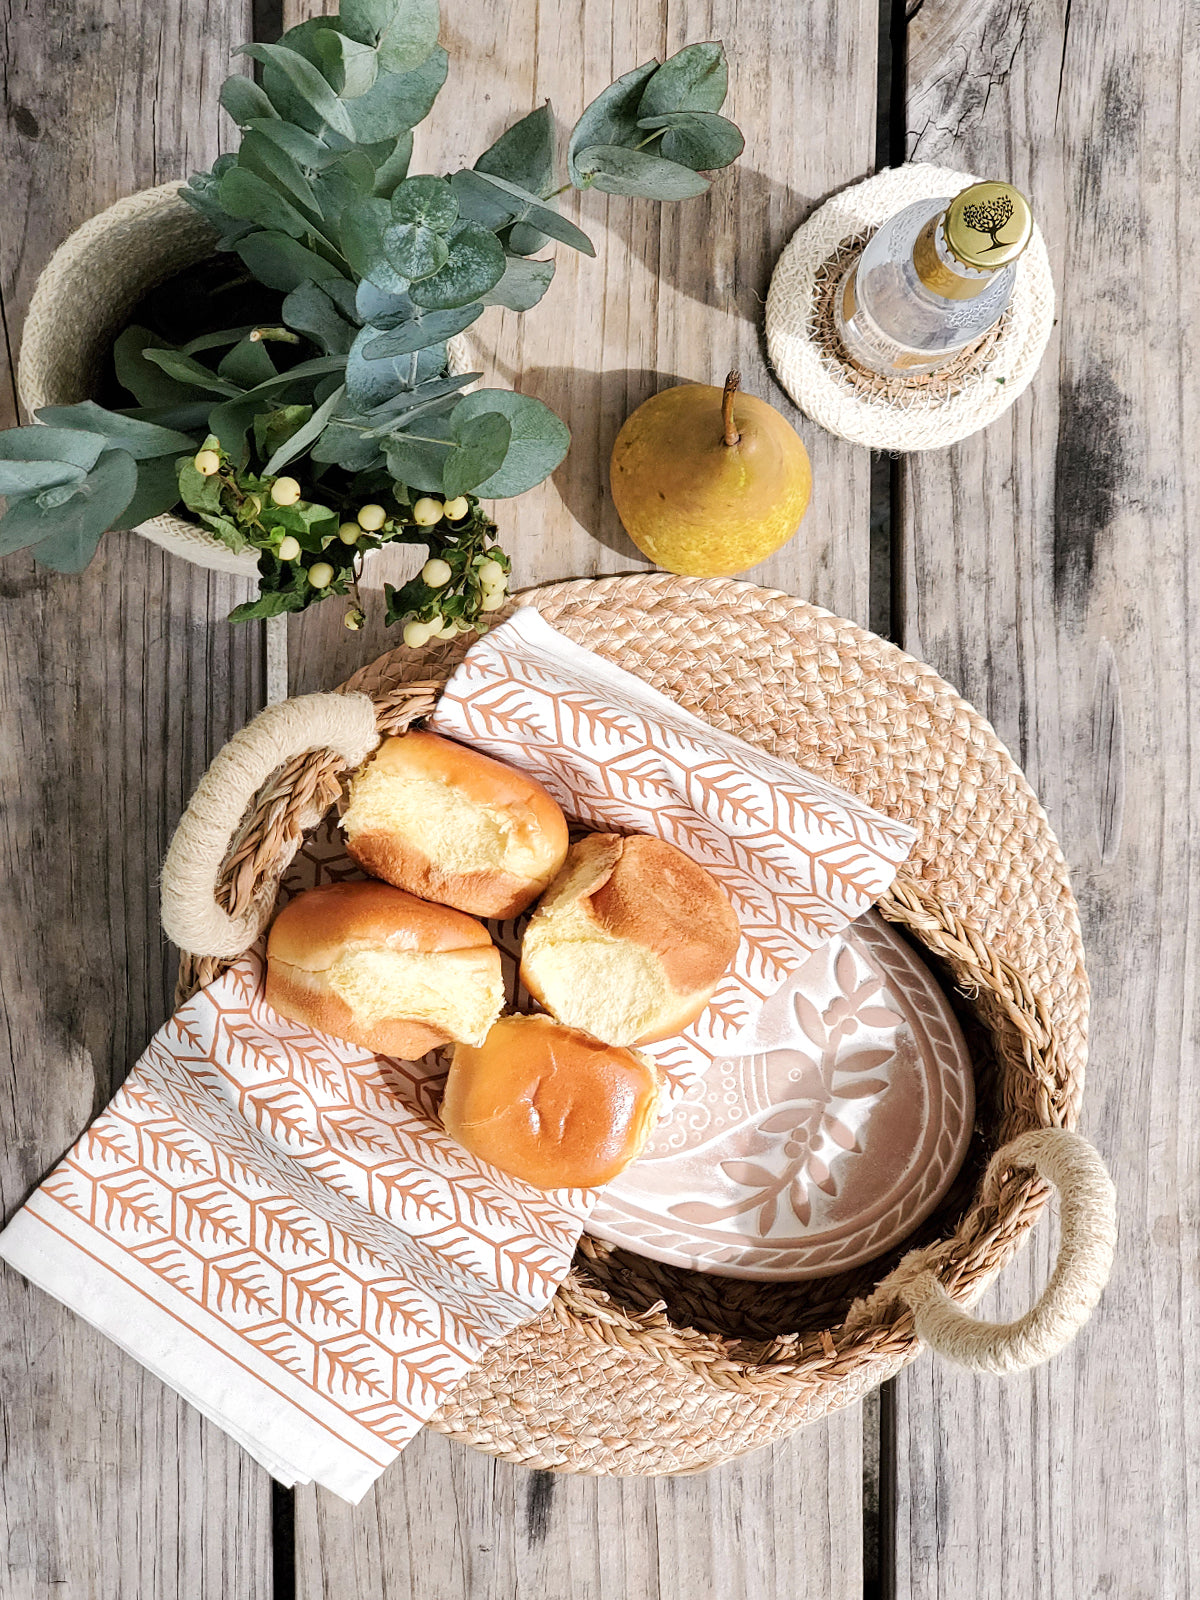 Bread Warmer & Basket Gift Set with Tea Towel - Bird Oval